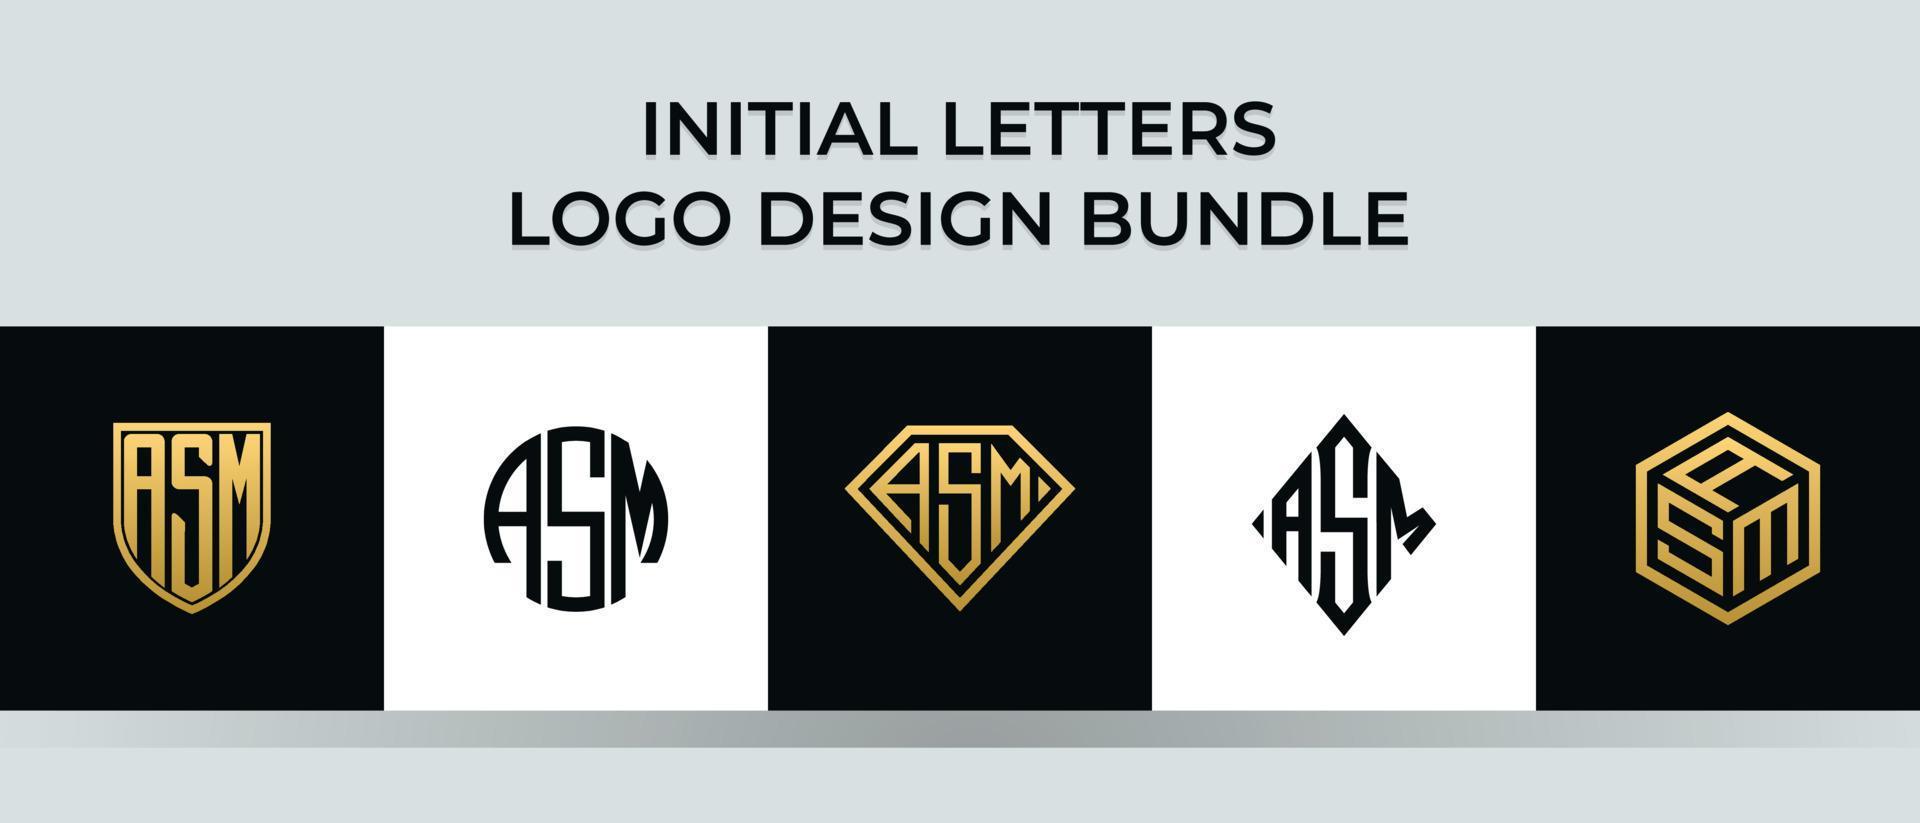 lettere iniziali asm logo design bundle vettore